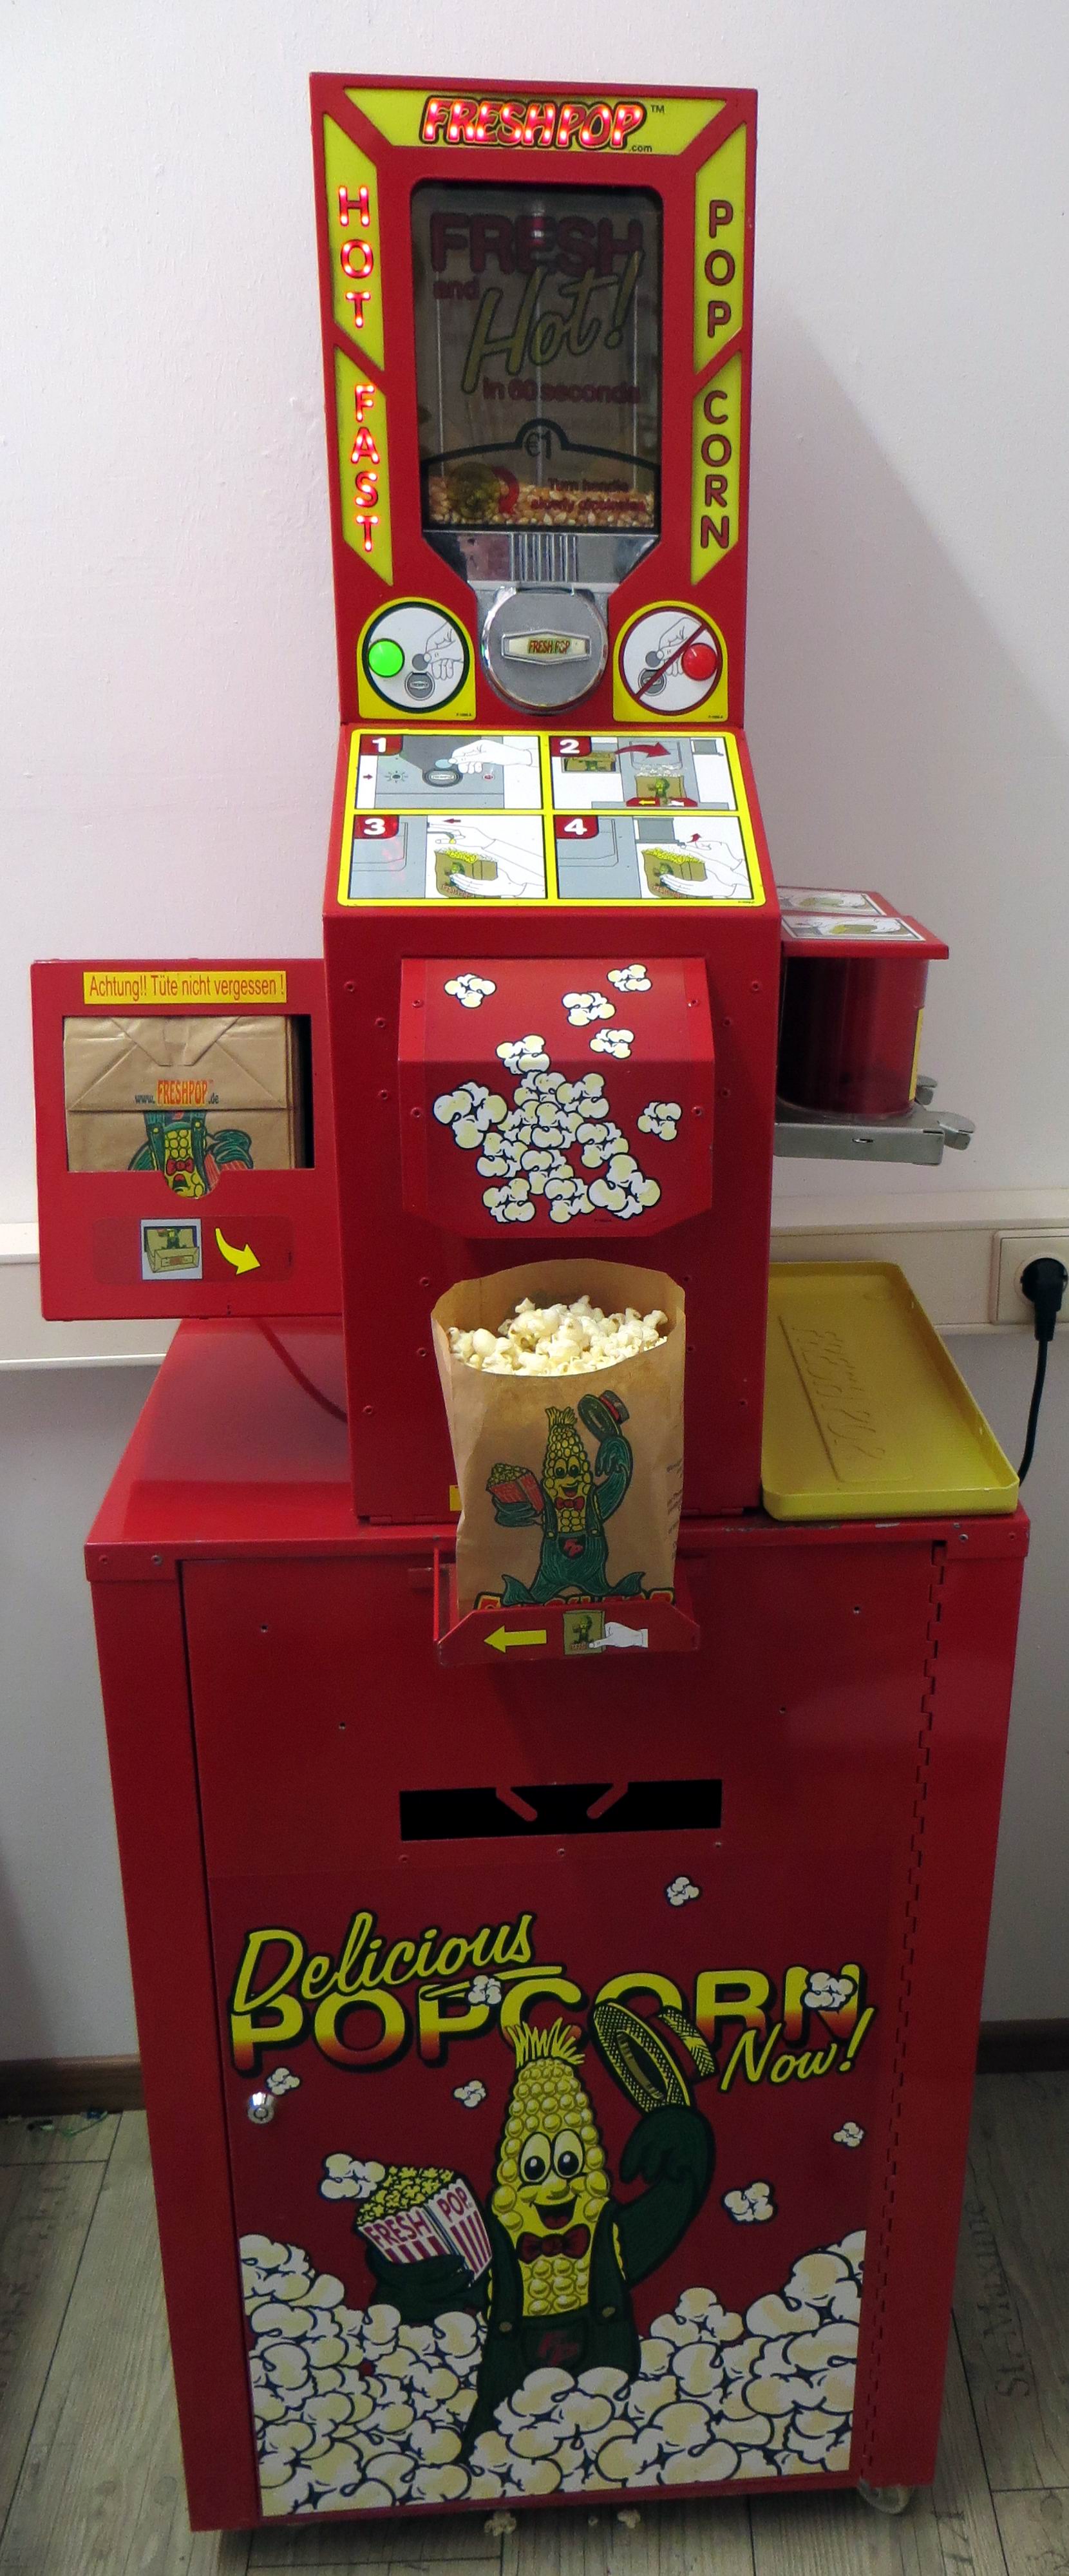 voll funktionsfÃ¤higer Popcornautomat
1â¬ MÃ¼nzer, 220V, TÃ¼tenspender, Salz-/Zuckerspender

Mietpreis auf Anfrage